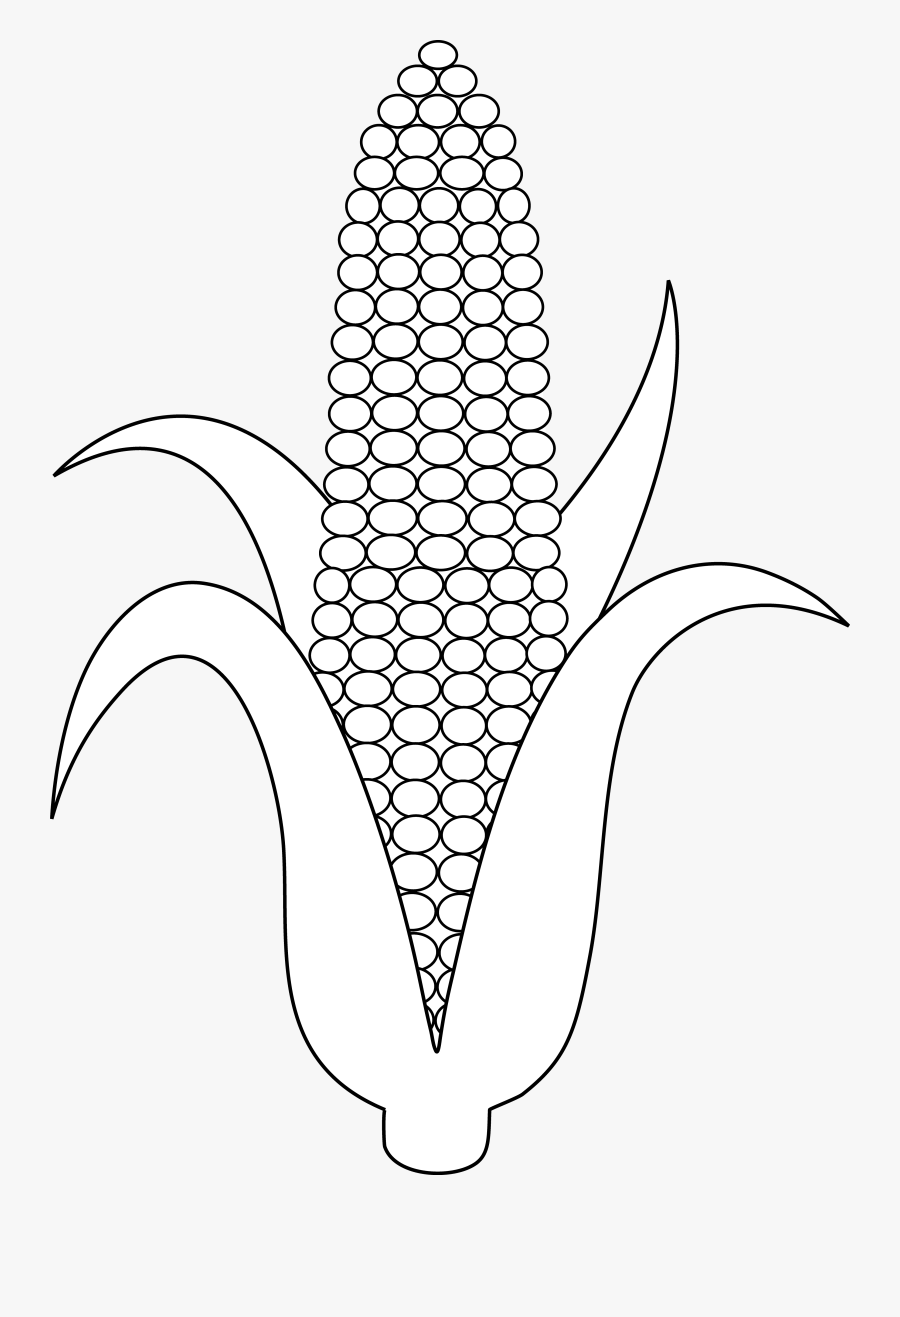 Cornucopia Drawing Outline - Corn Clipart Black And White, Transparent Clipart